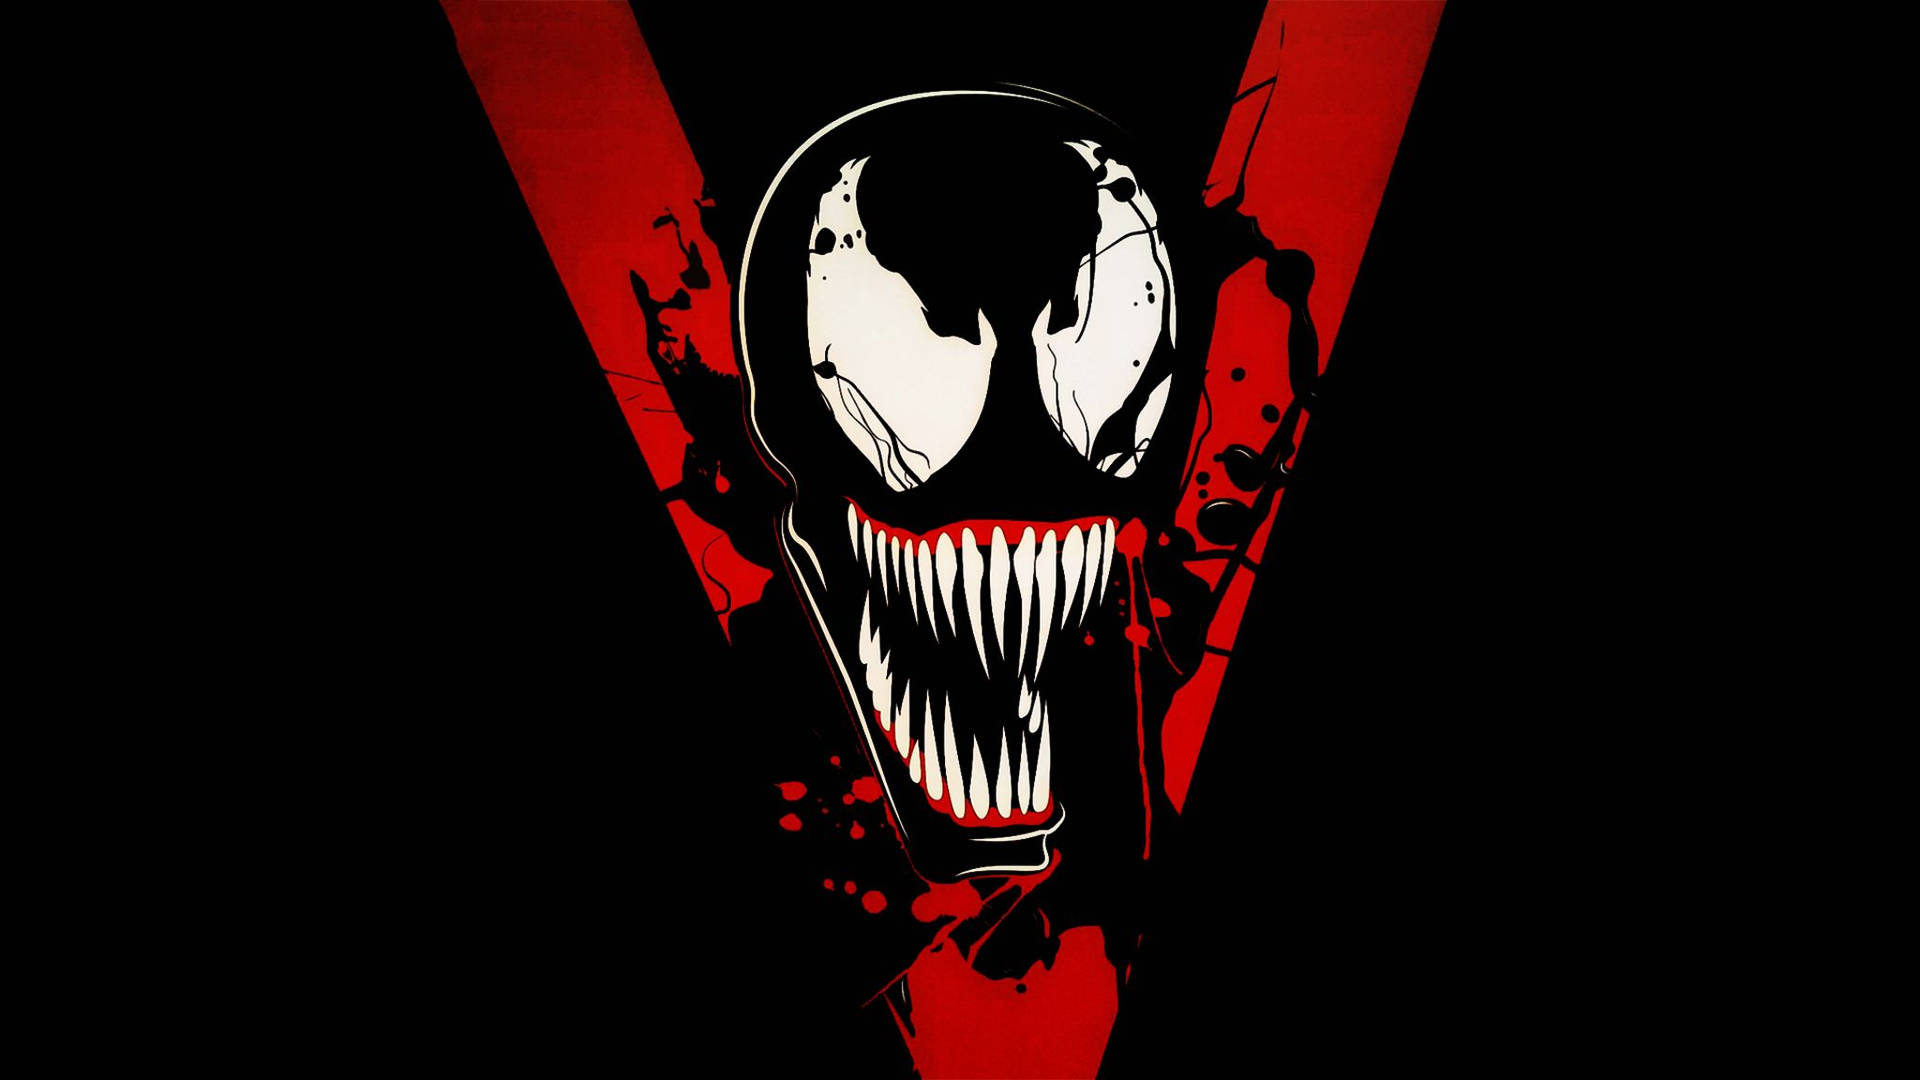 Marvel Alien Symbiote Venom Wallpaper